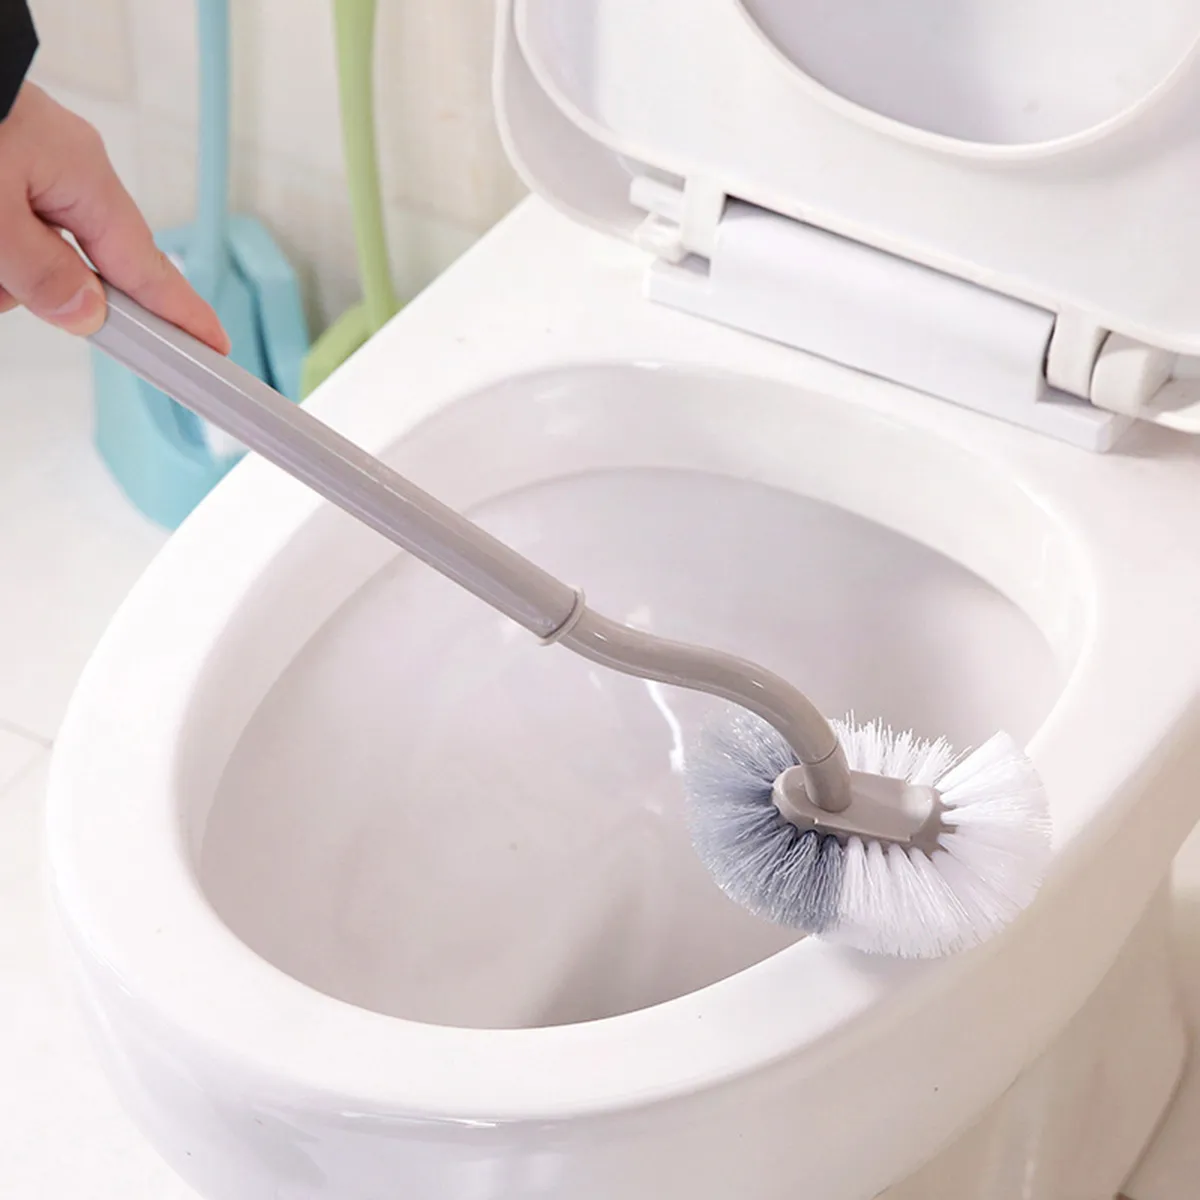 Escova de vaso sanitário de cabo longo para limpeza completa, design suspenso Cinzento big image 1